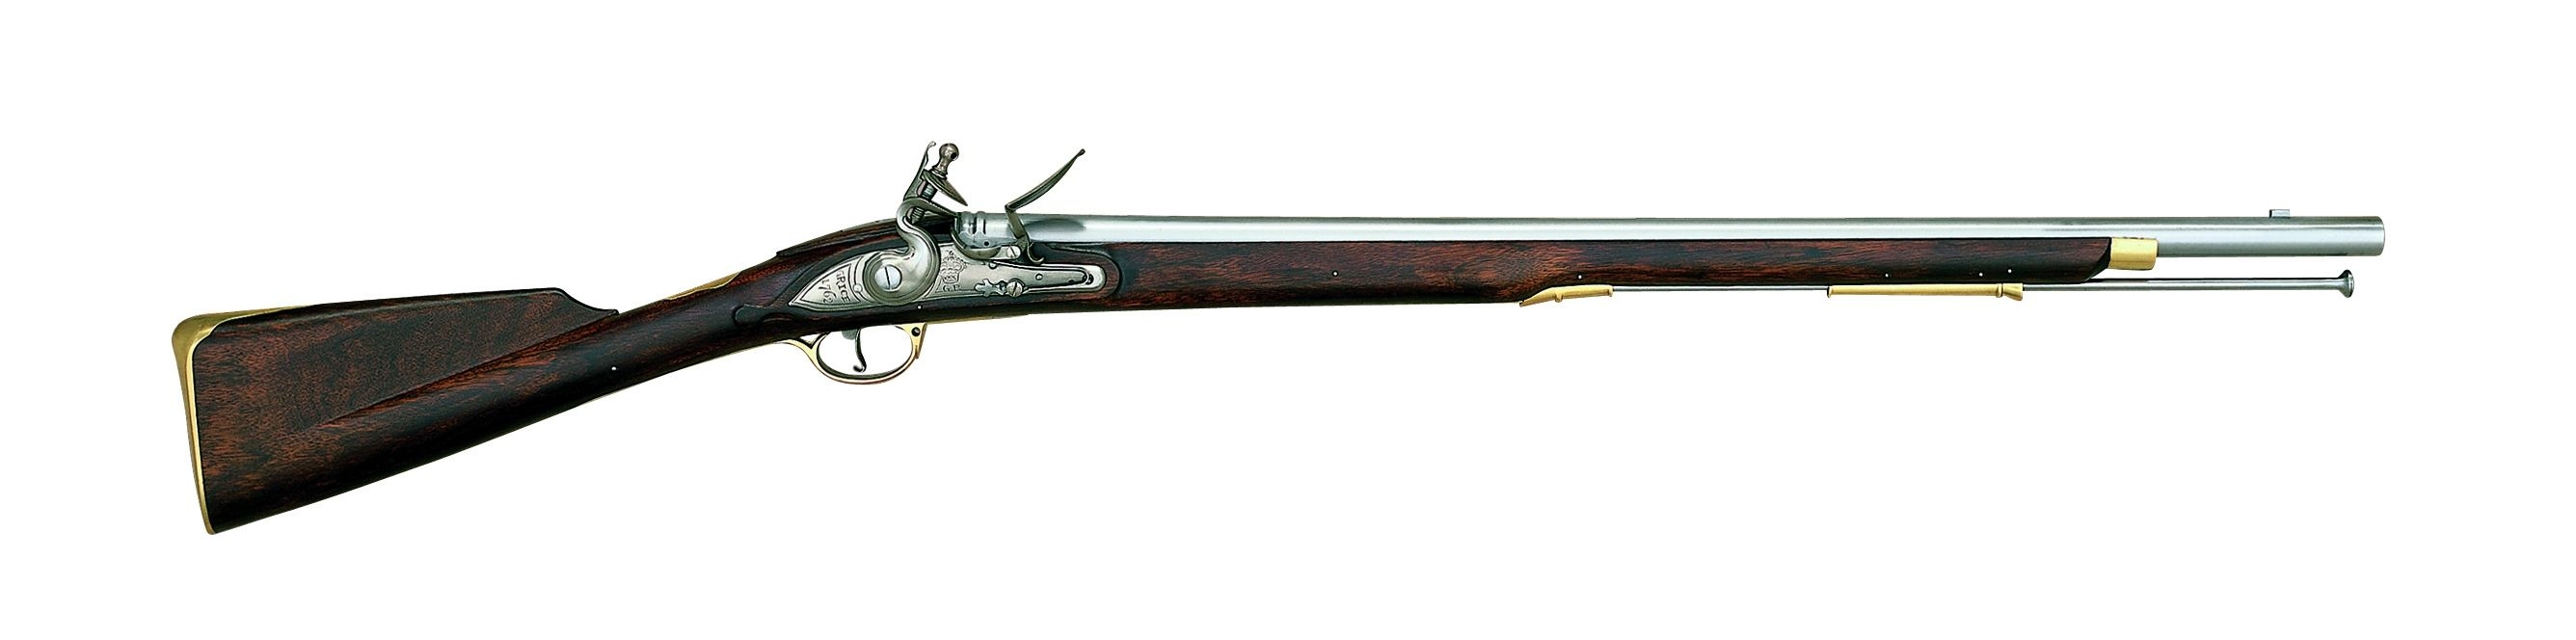 Image of Muszkiet Brown Bess Carabine .75 (BCKP/BROWN BESS CAR. .75)